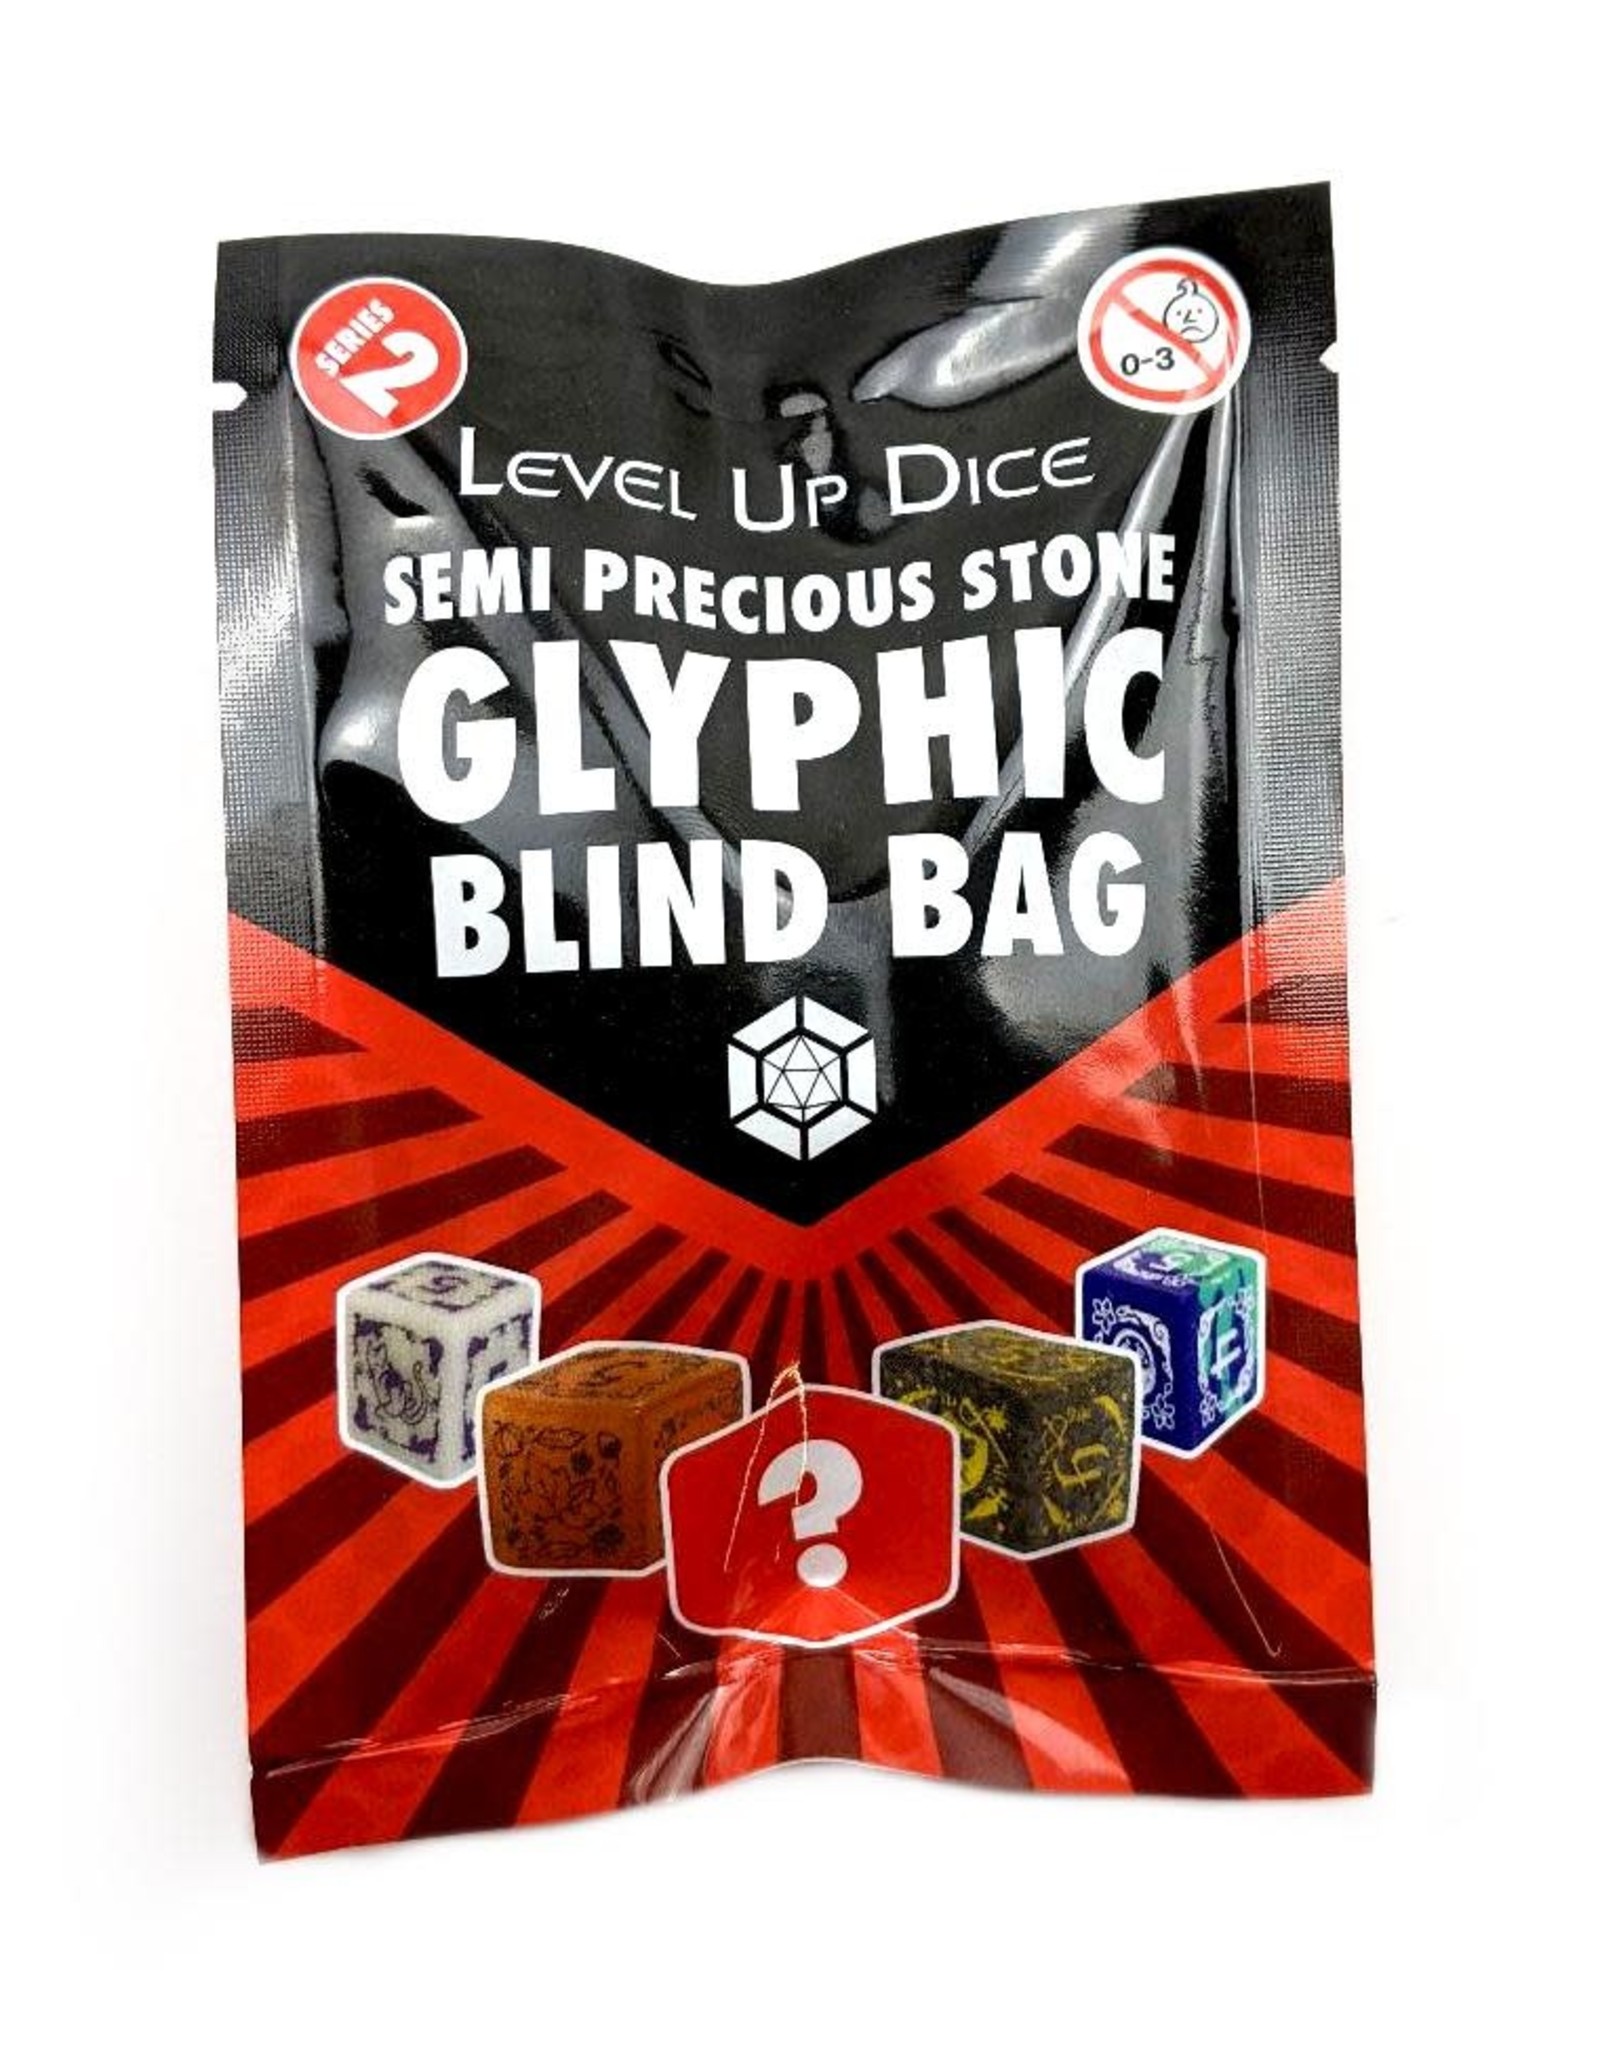 Level Up Dice Level Up Dice Semi Precious Glyphic Blind Bag S2